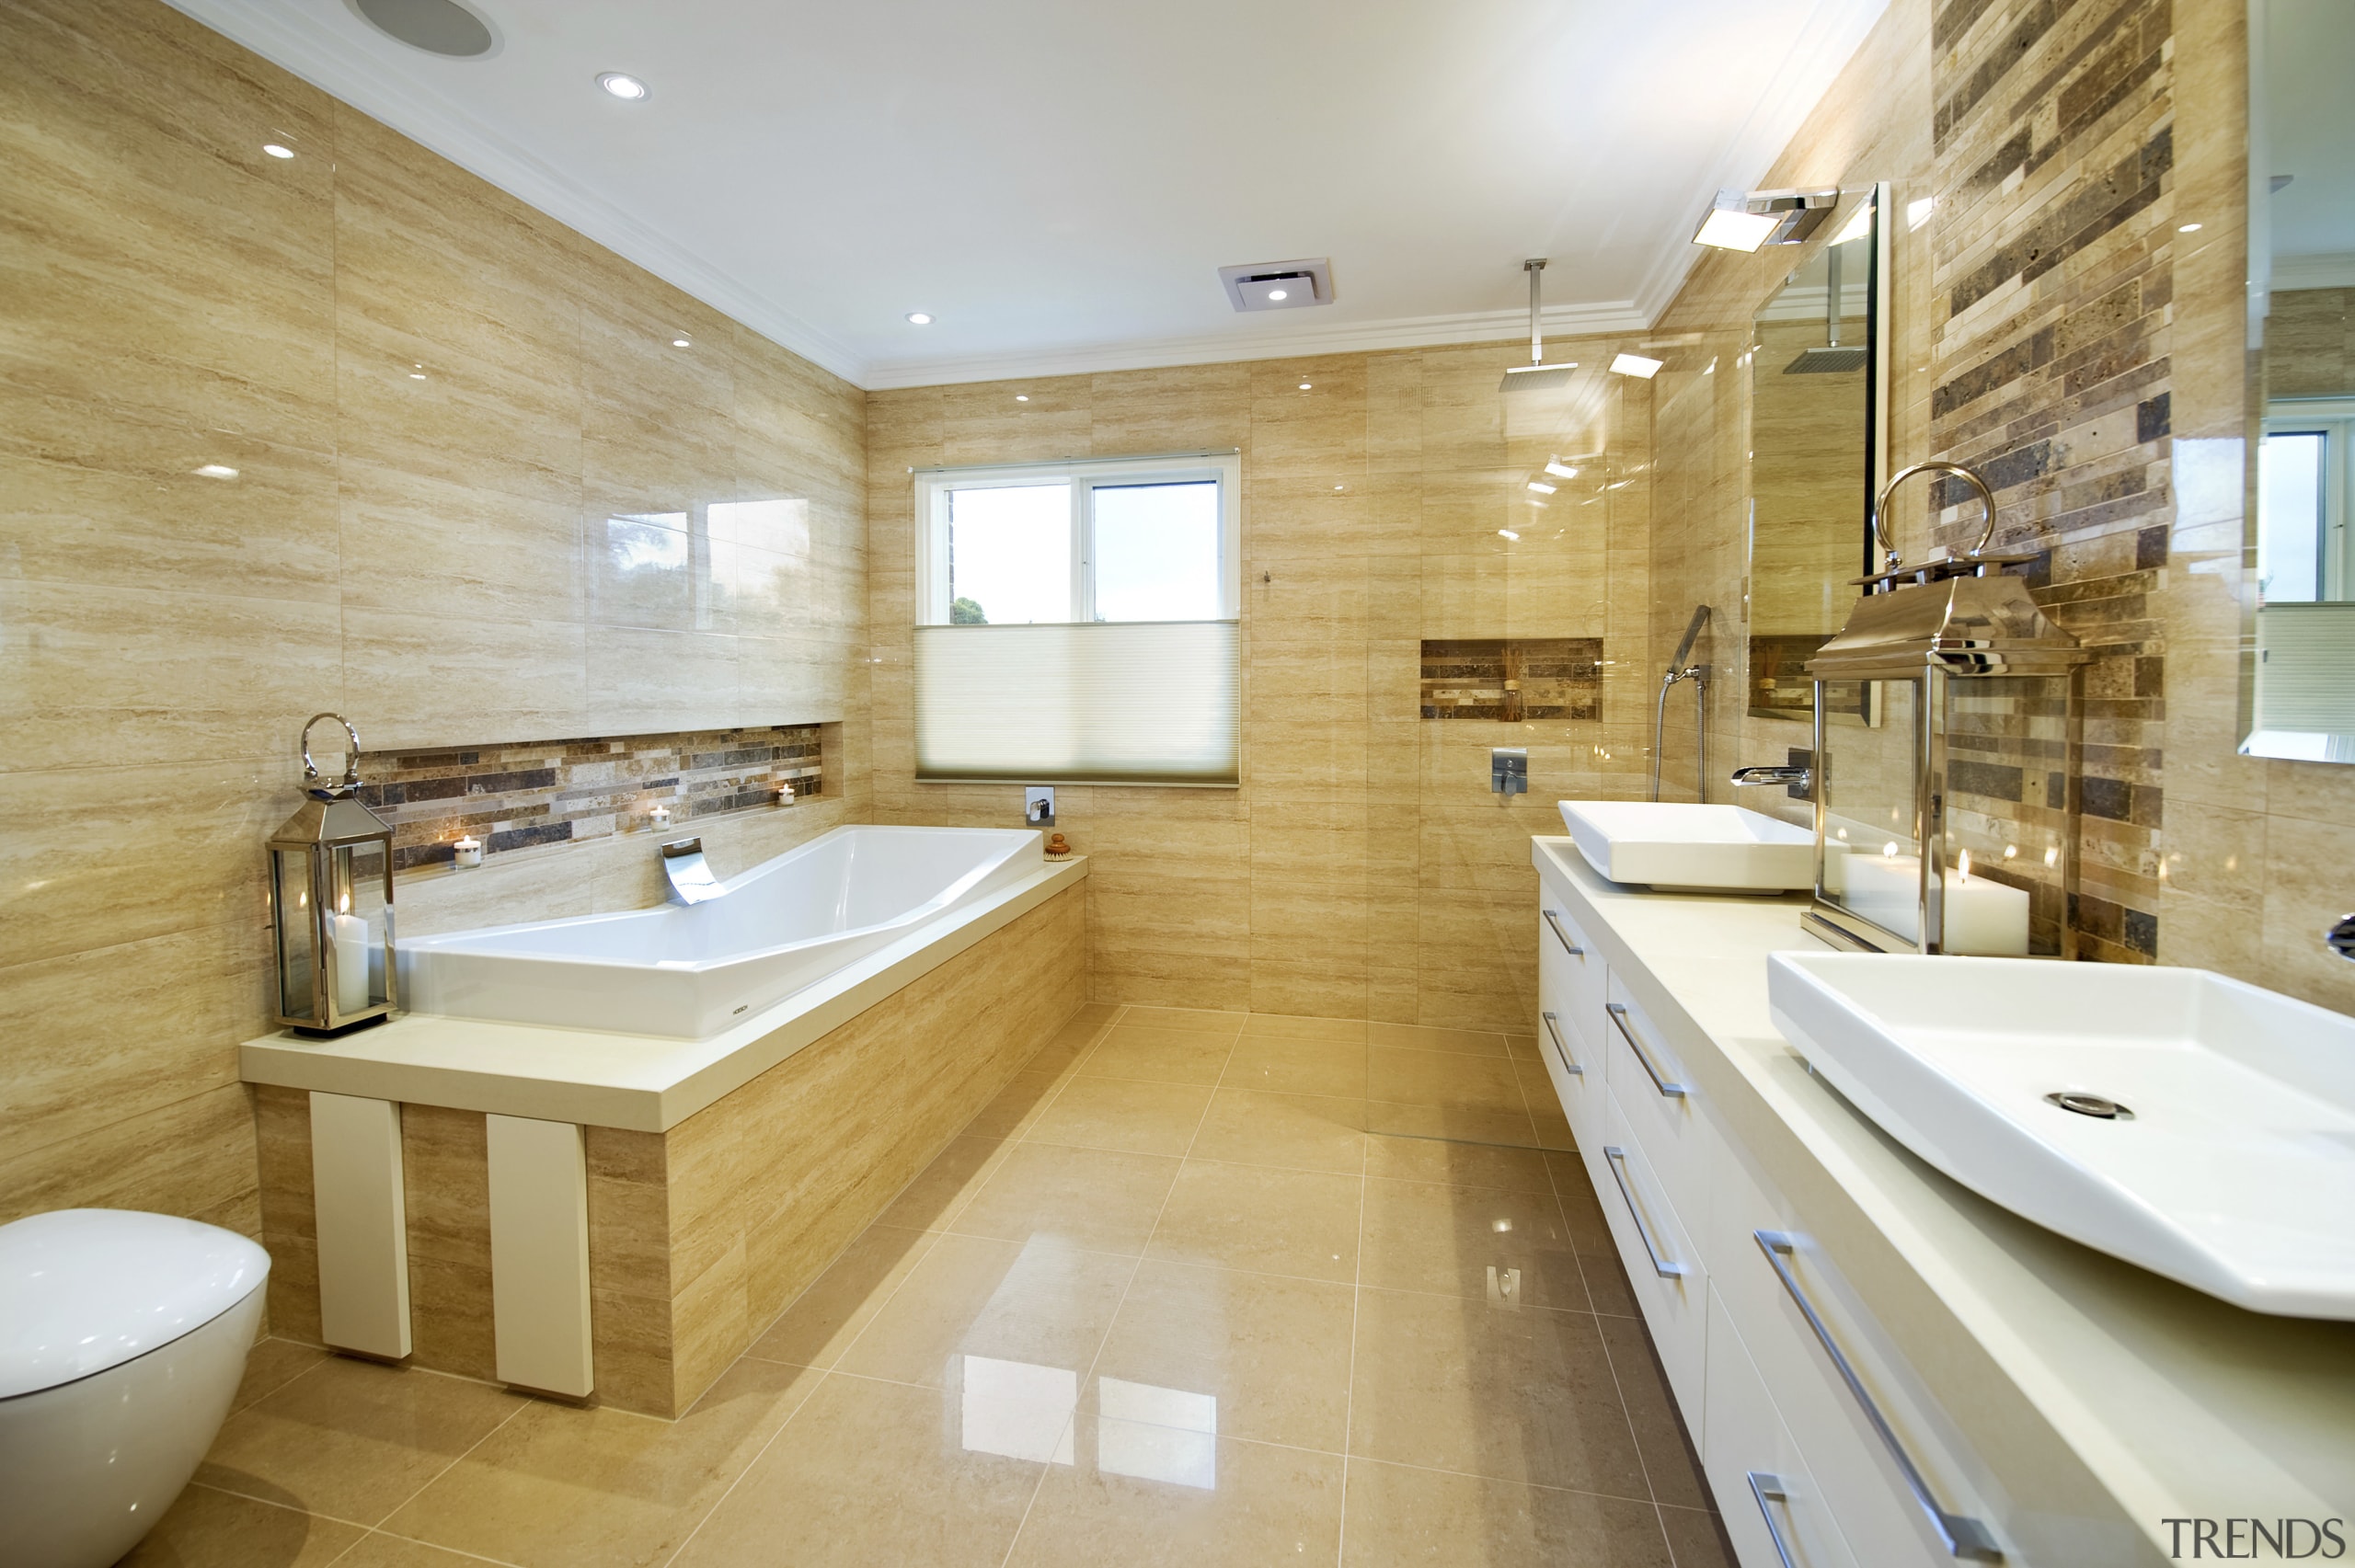 Overview of this natural colour bathroom - Overview bathroom, estate, floor, flooring, interior design, real estate, room, tile, orange